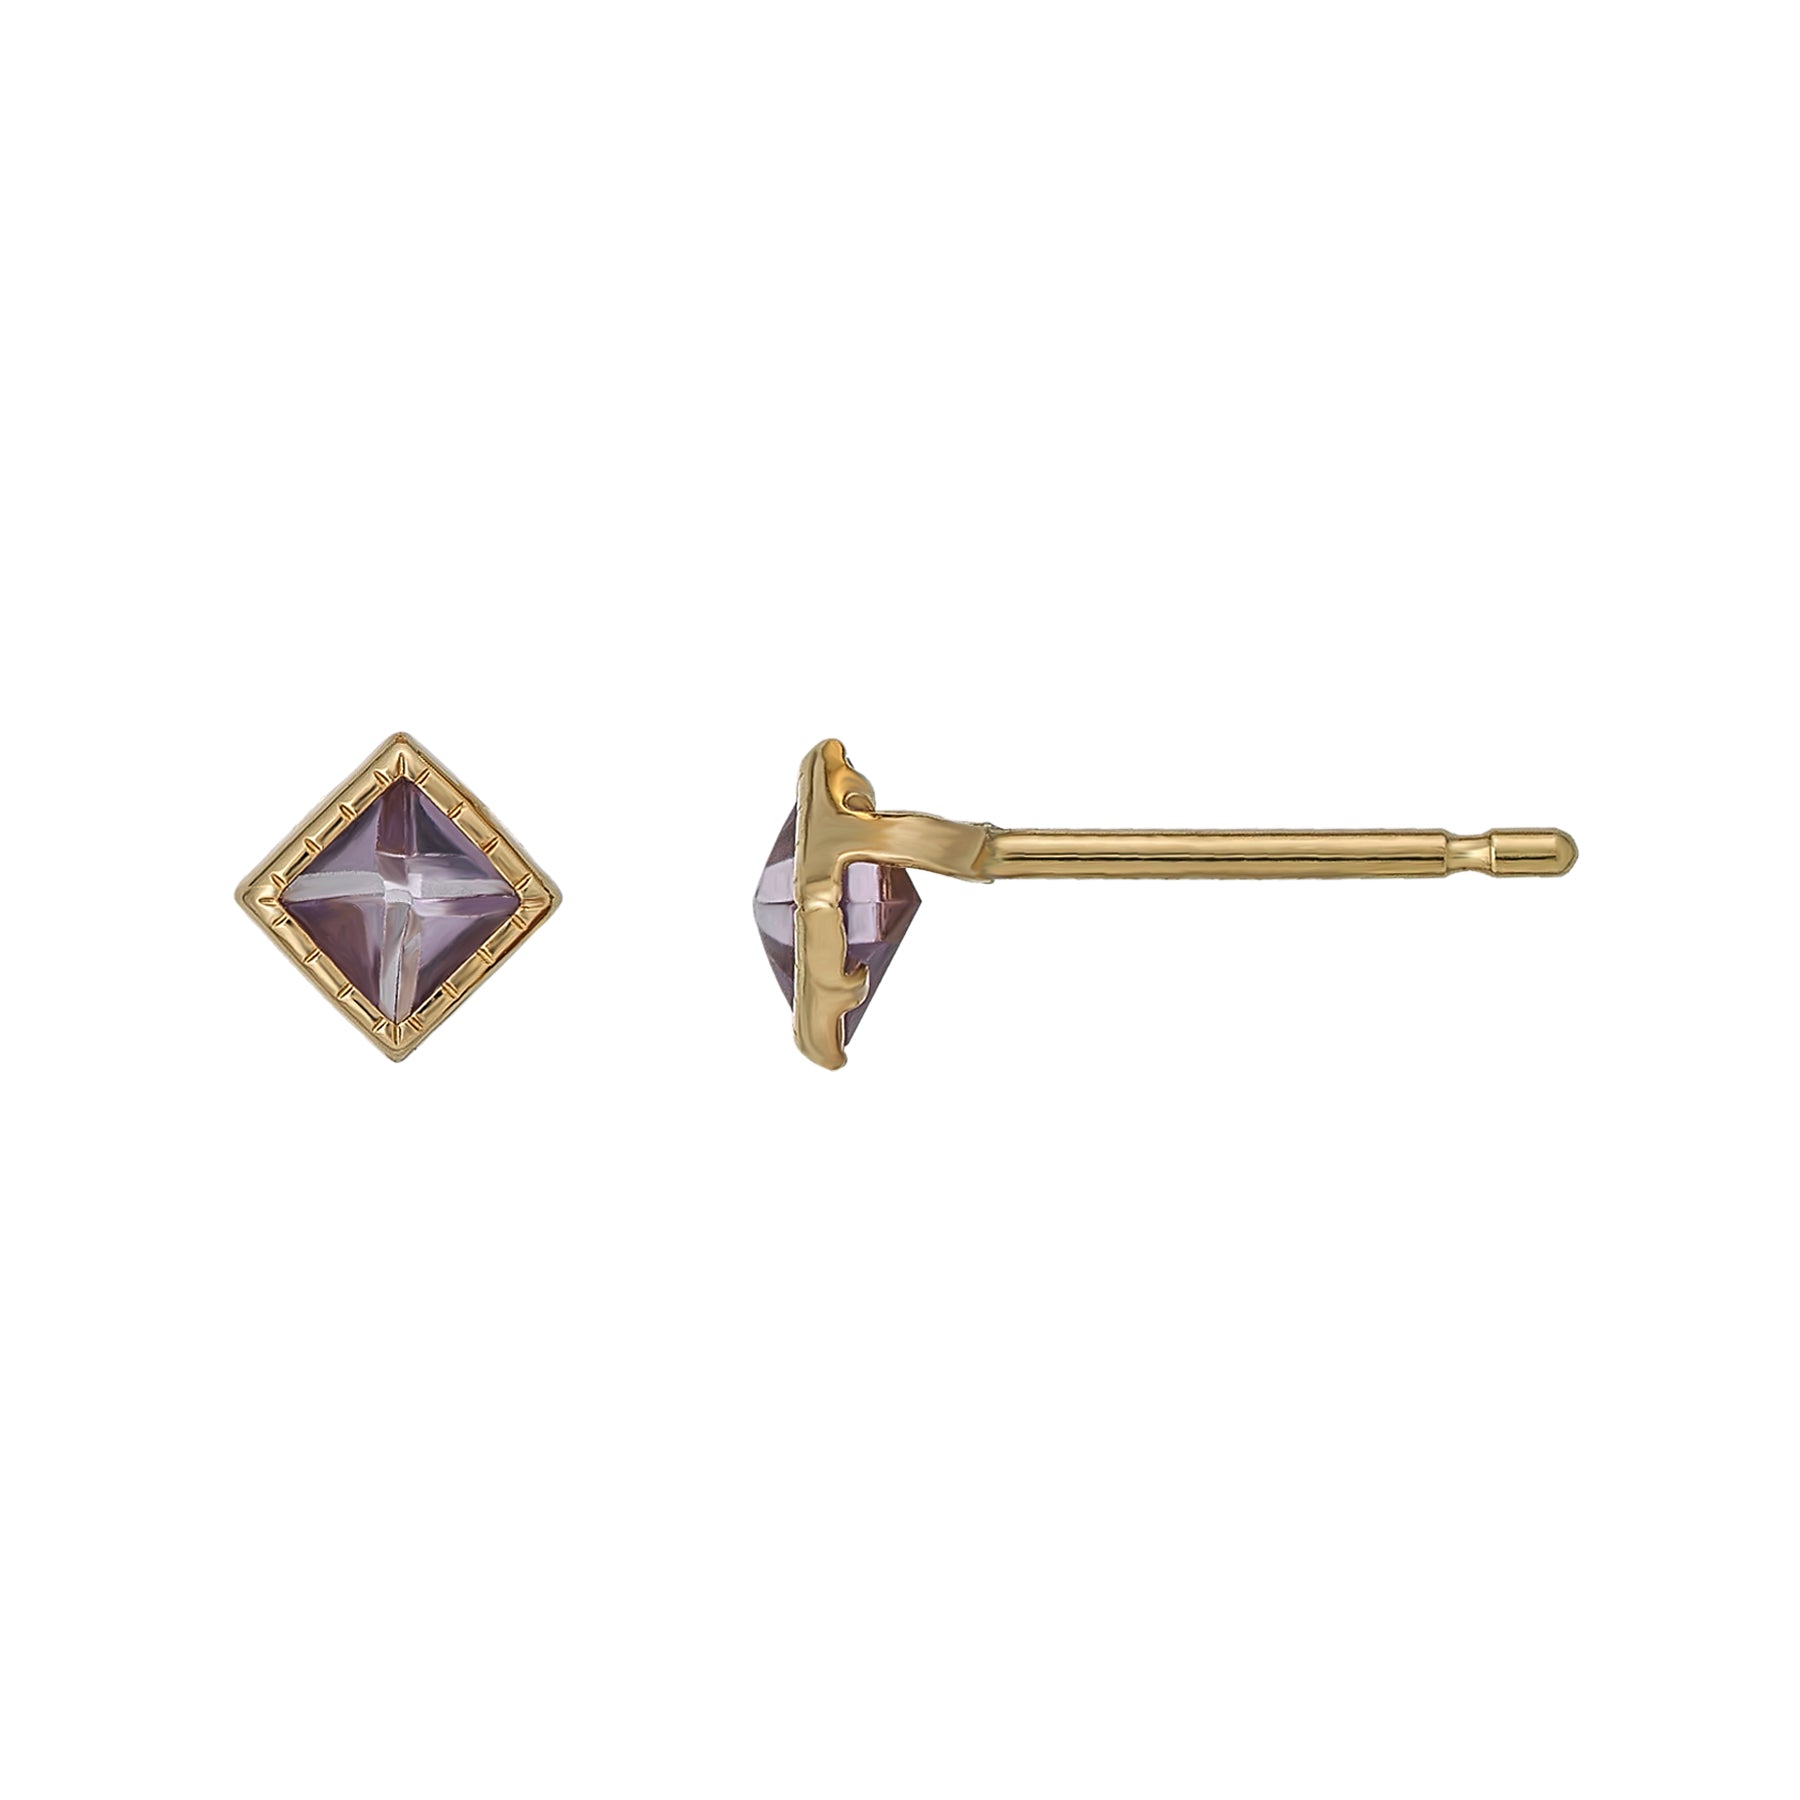 [Second Earrings] 18K Yellow Gold Light Amethyst Pyramidal Cut Earrings - Product Image